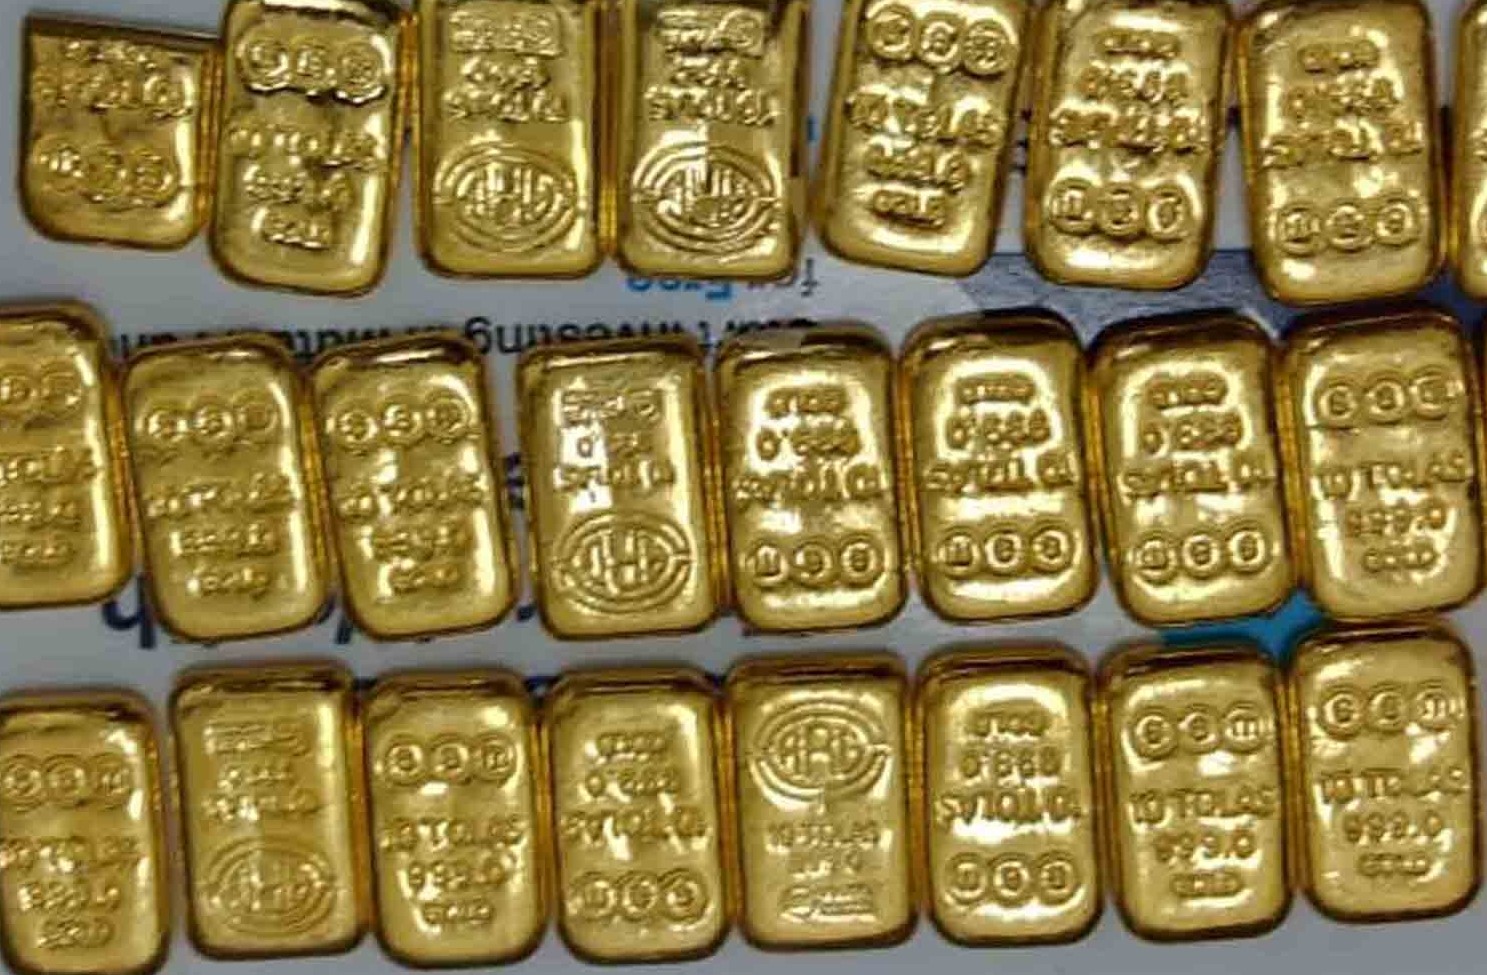 Smuggled gold worth Rs 10 lakh seized at Chennai airport